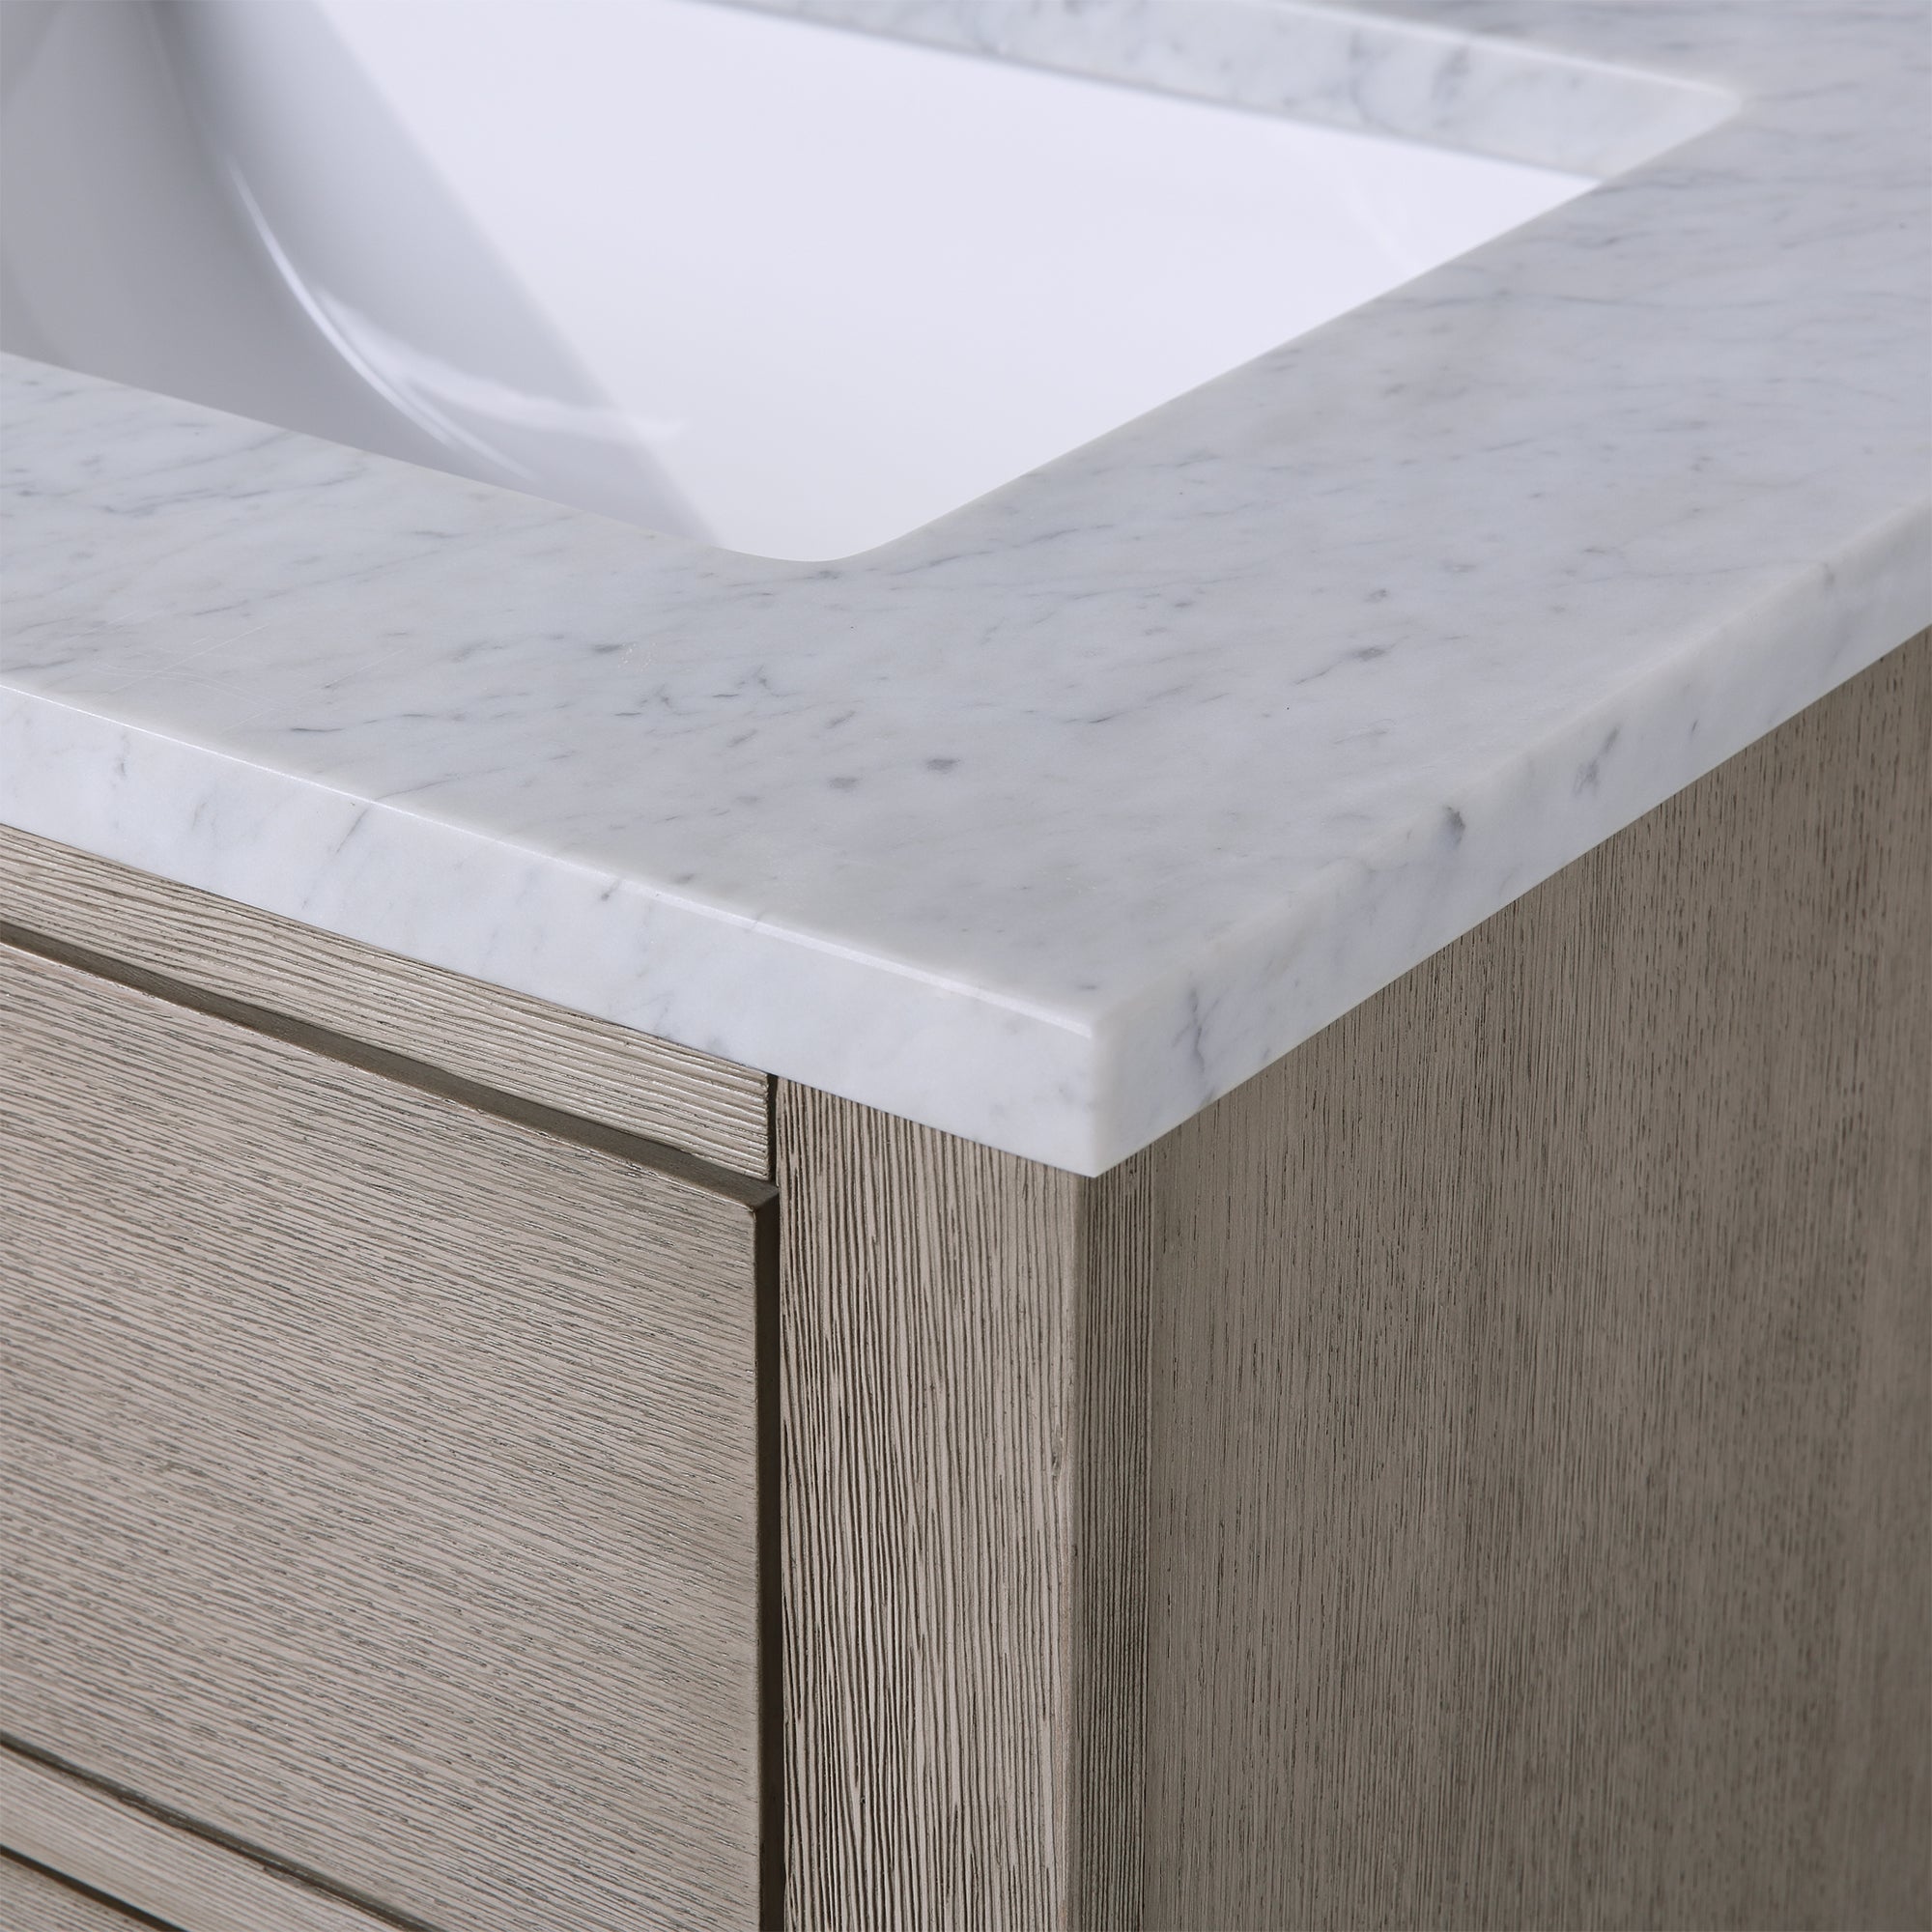 Water Creation | Chestnut 60 In. Double Sink Carrara White Marble Countertop Vanity In Grey Oak | CH60CW03GK-000000000